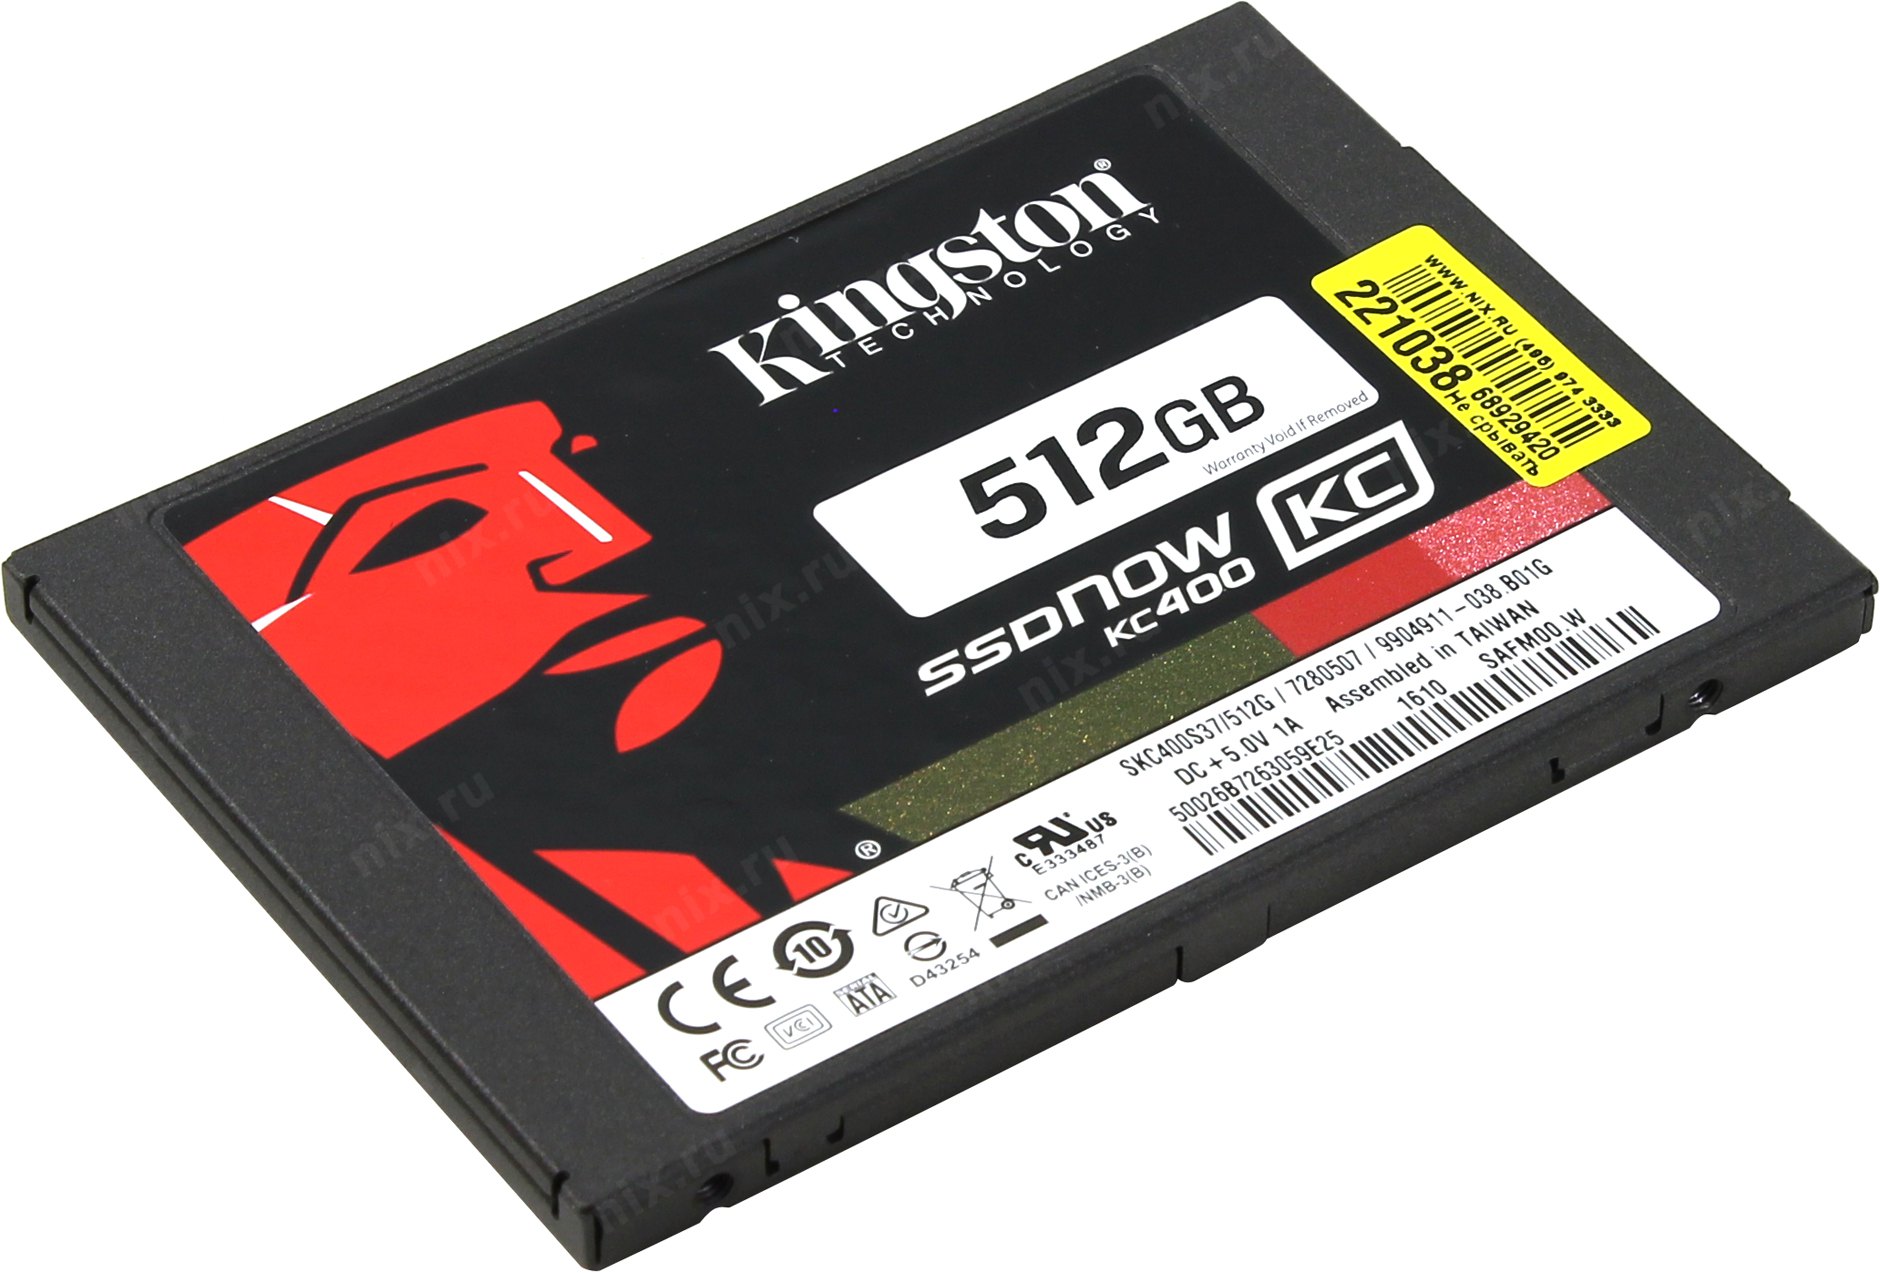 Ssd 512 гб kingston. SSD Kingston 512gb. SSD SATA 3 Kingston 512. Kingston SSD SATA 512 GB. SSD Kingston kc600 512gb SATA.